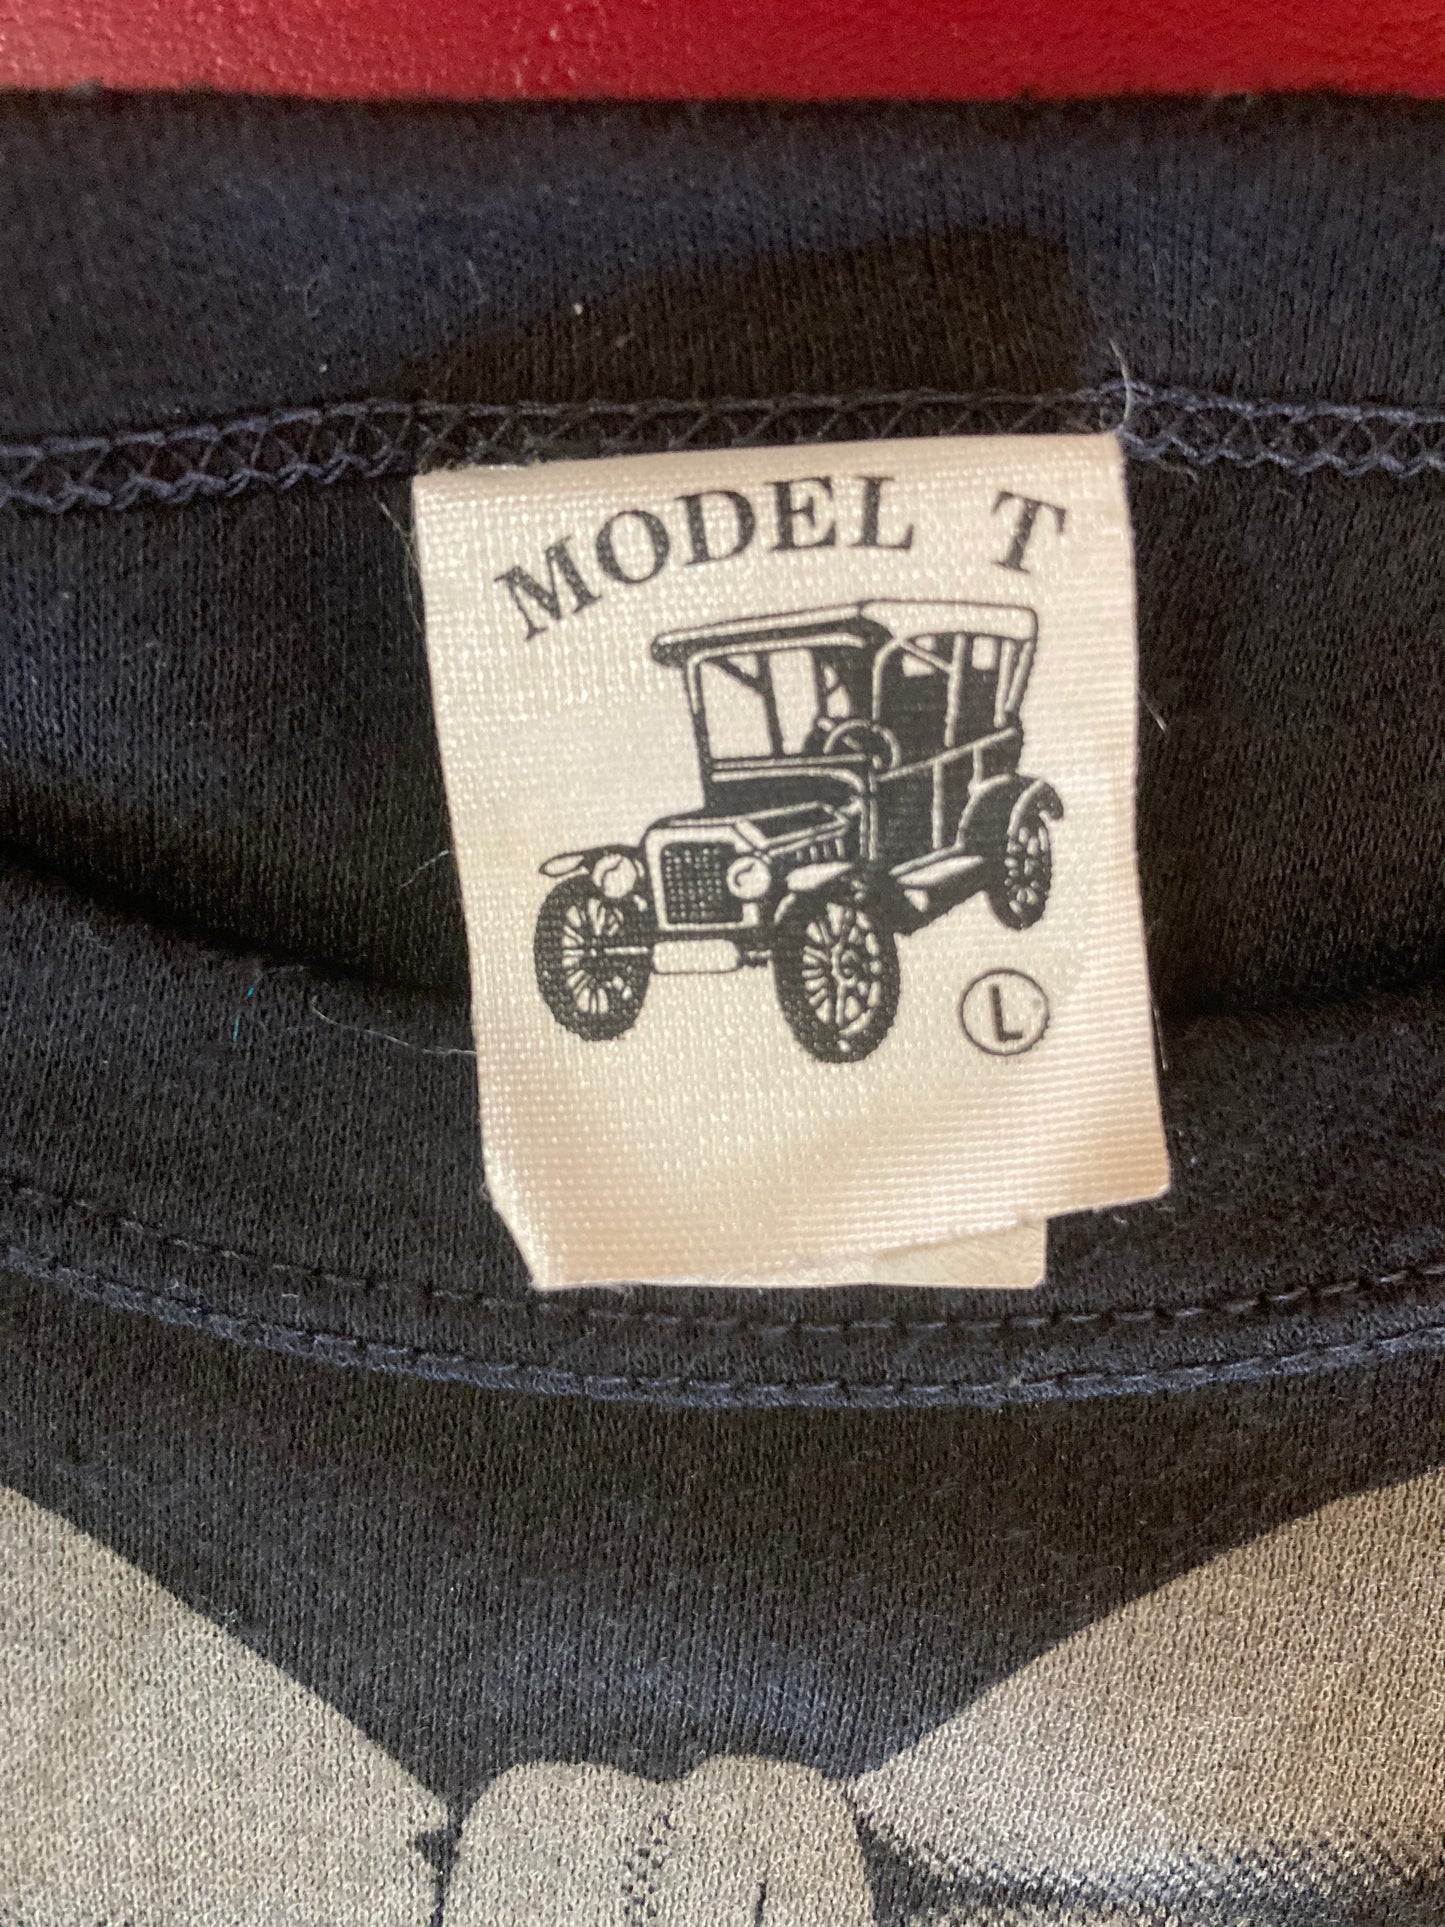 model t. tux shirt